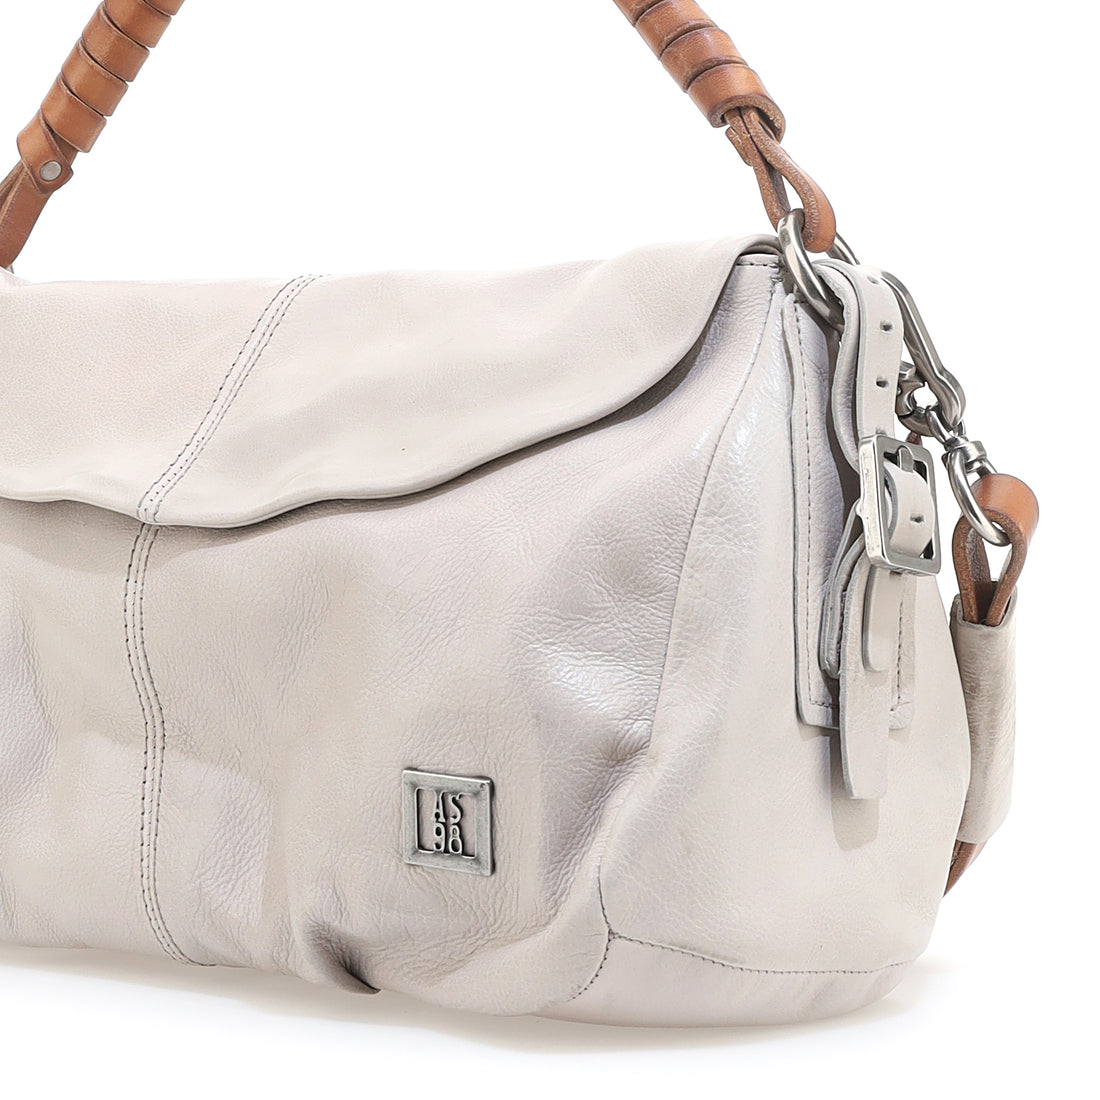 Mindy - A.S. 98 - Handbags